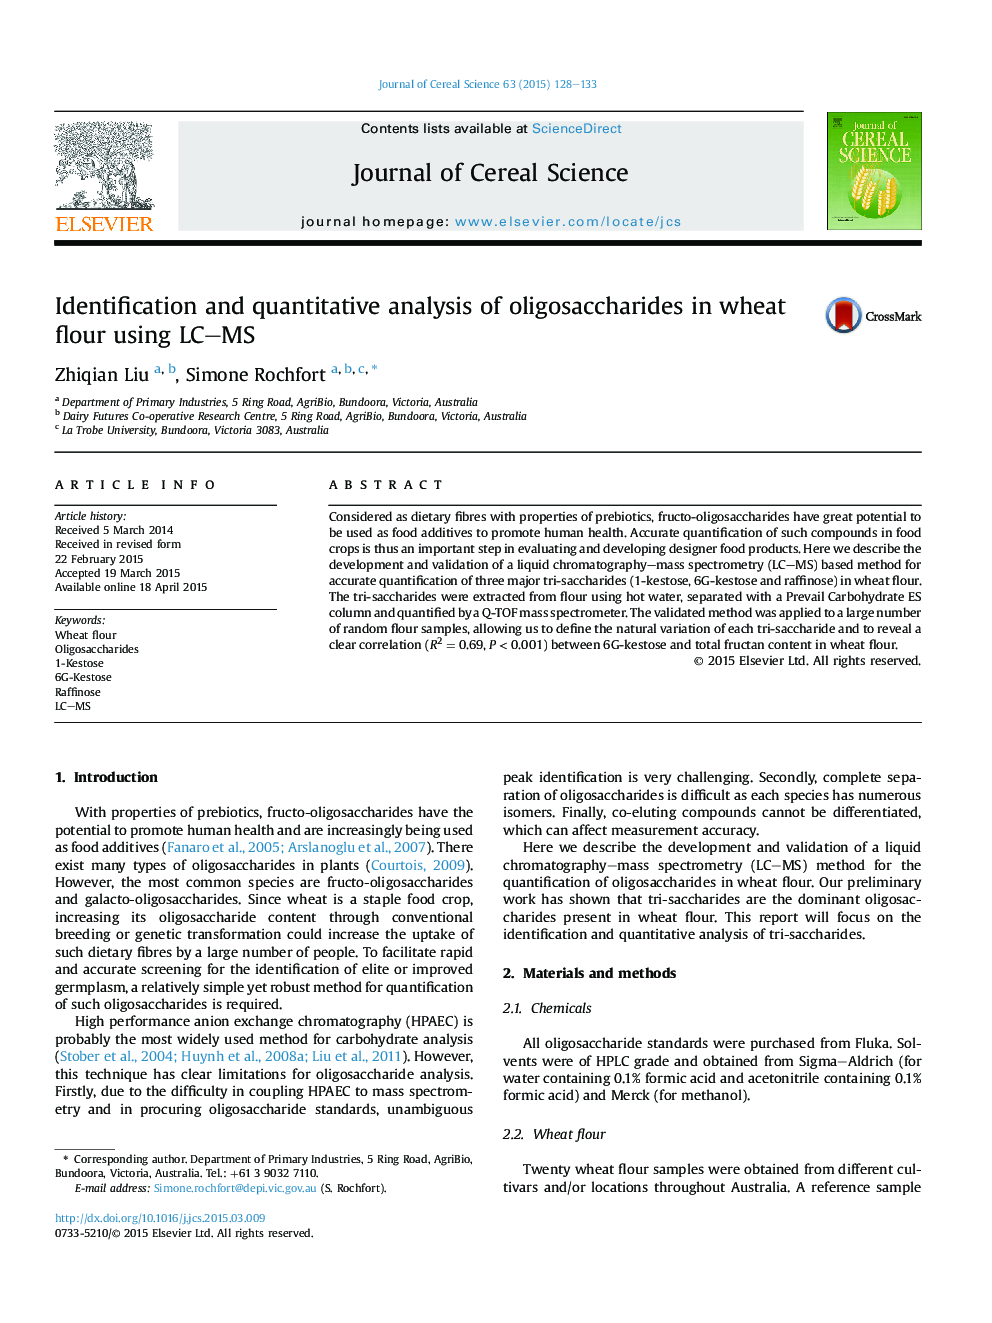 Identification and quantitative analysis of oligosaccharides in wheat flour using LC–MS